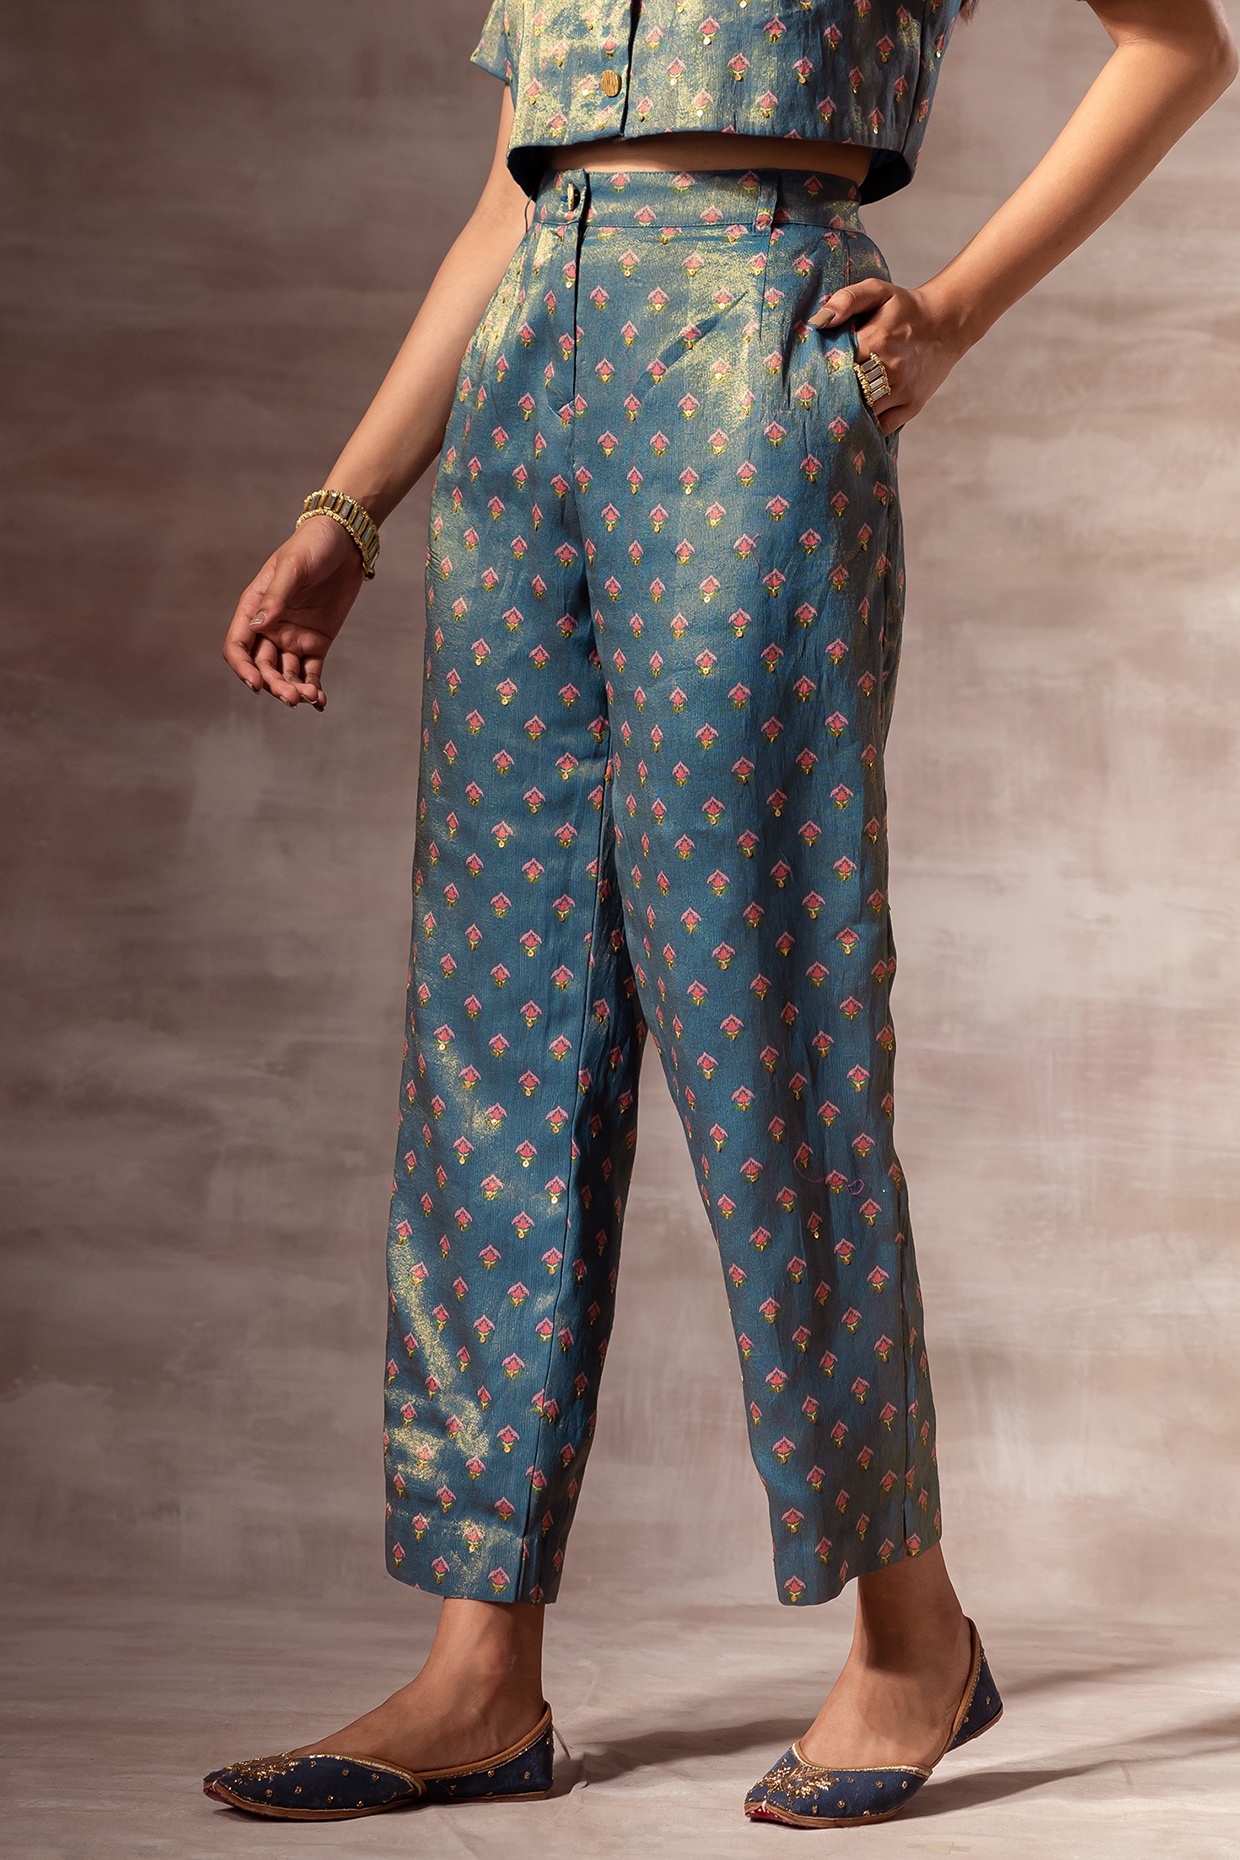 Cotton and Silk Casual Wear Trouser Gypsy Harem Pants - Jt International,  Jaipur, Rajasthan